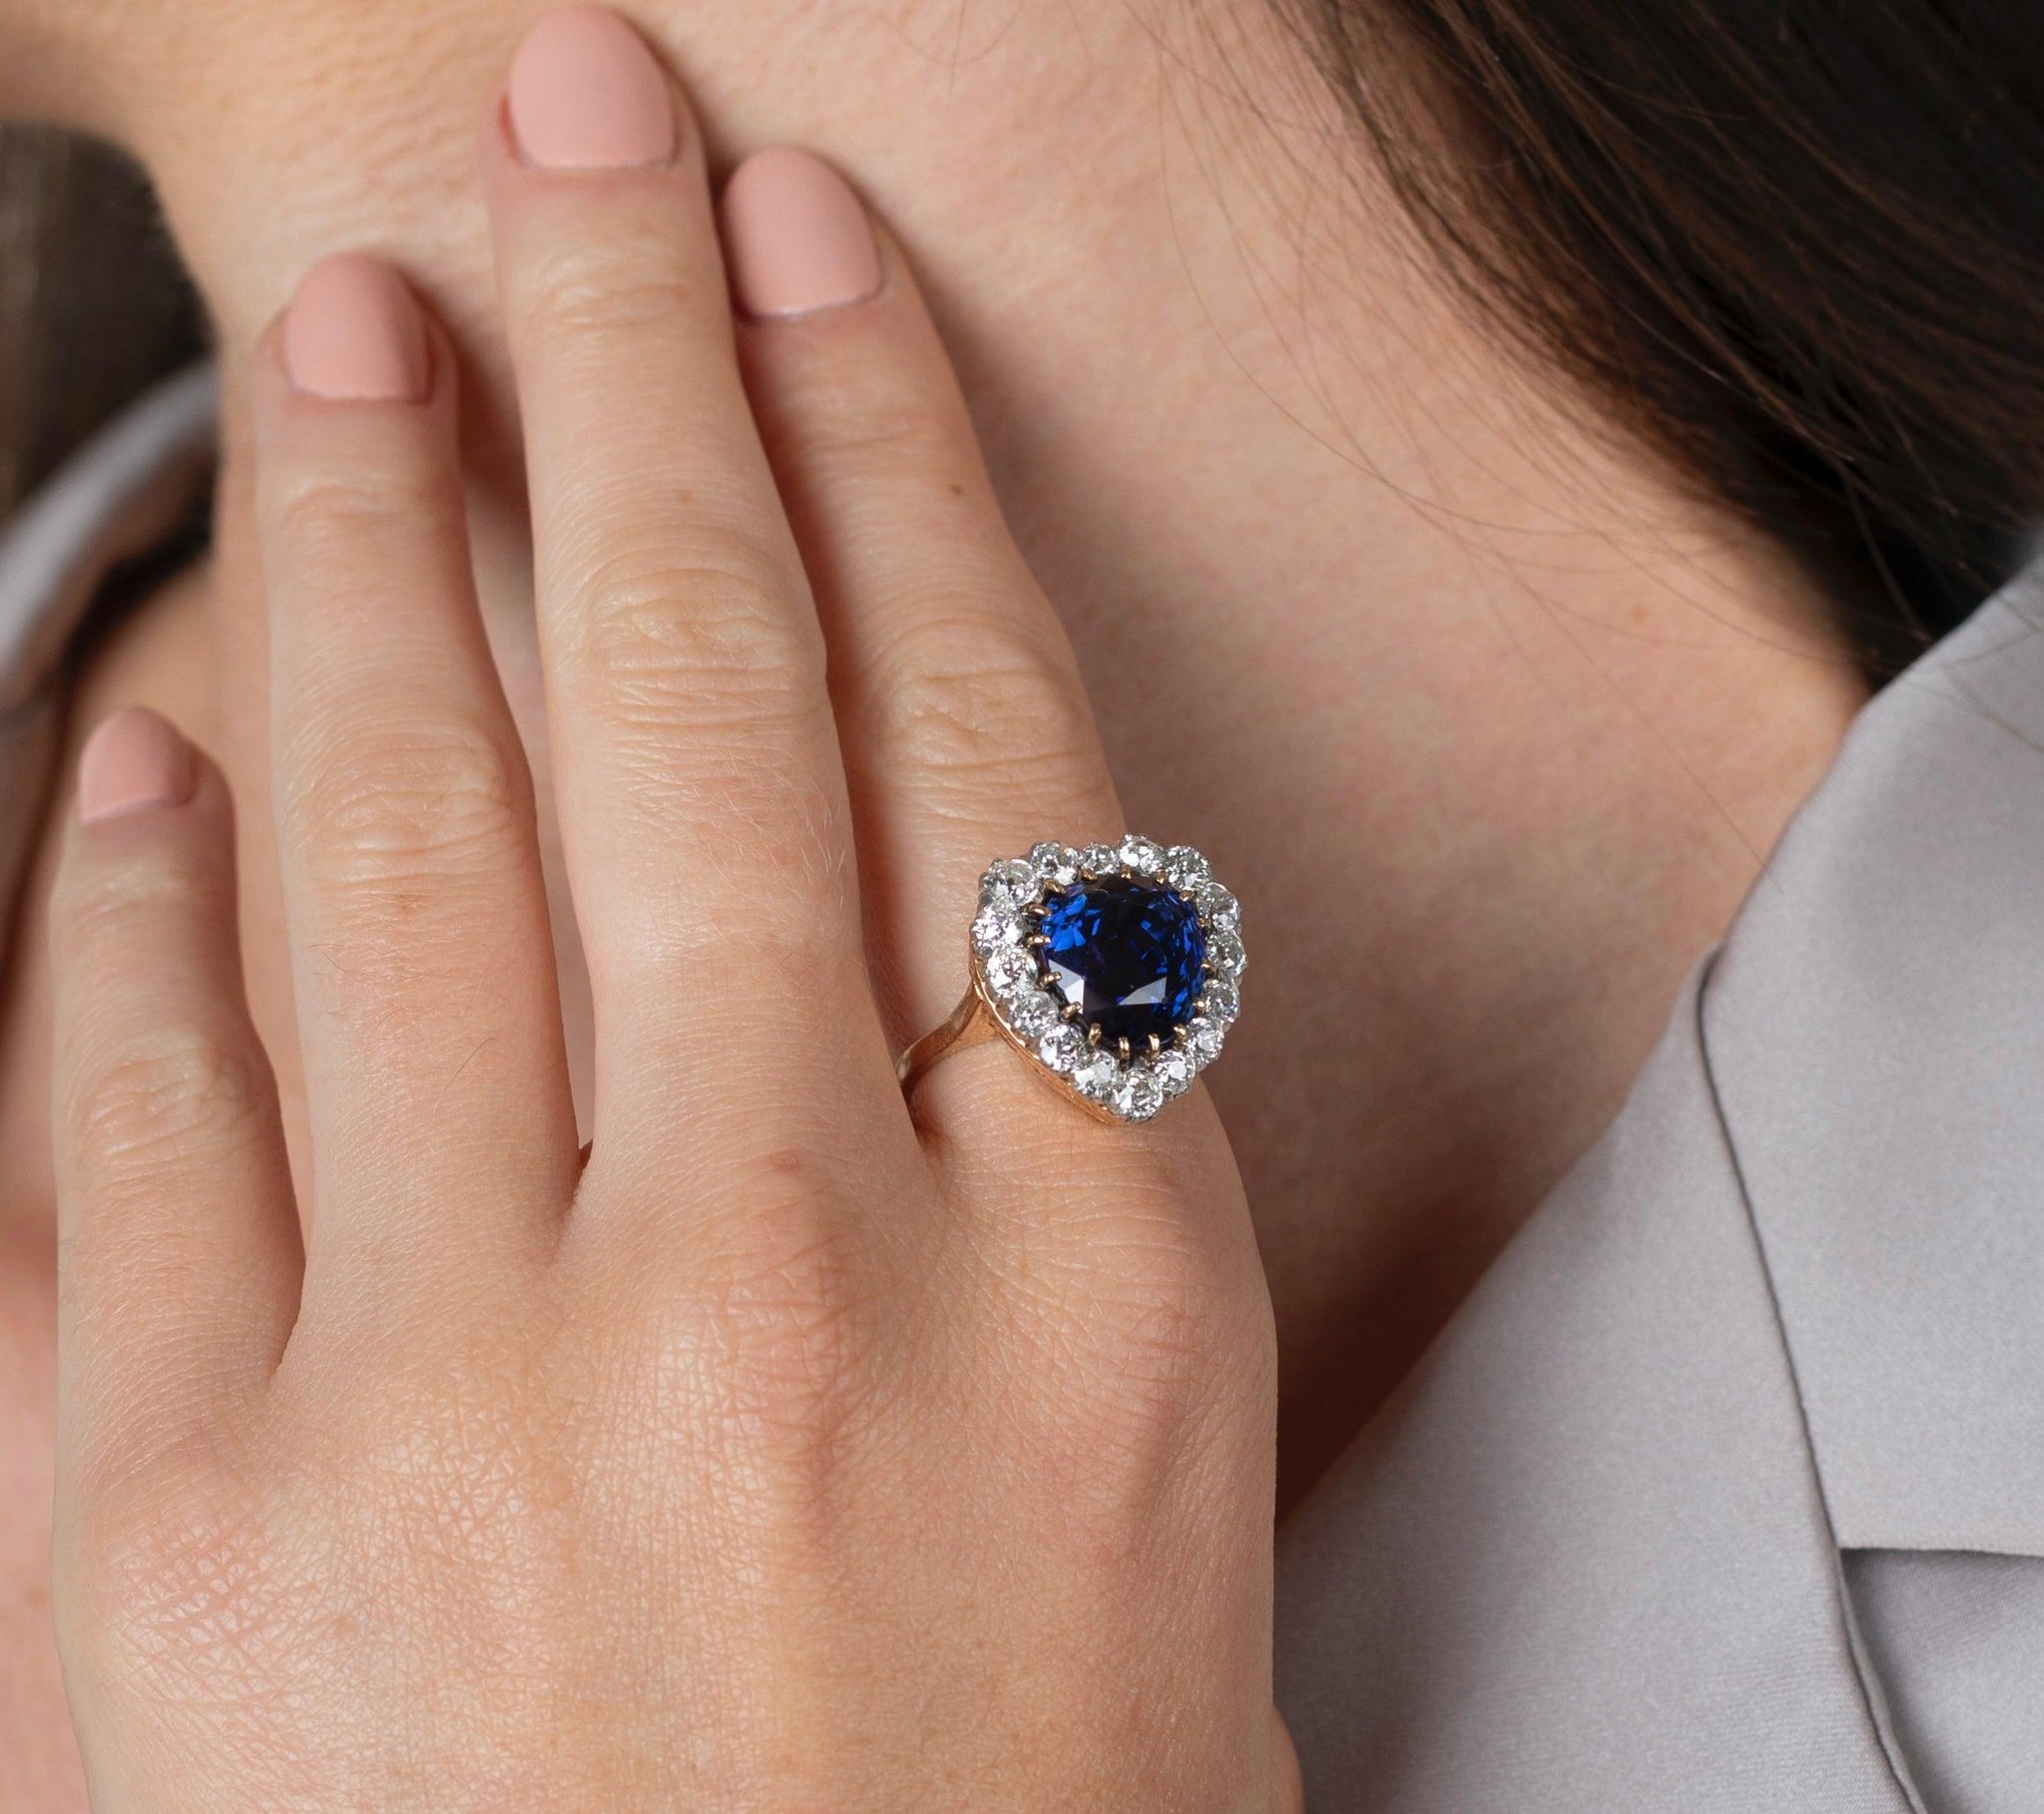 9 Carat No Heat Ceylon Blue Sapphire and Old Euro Cut Diamond Ring in 14K-Rings-ASSAY